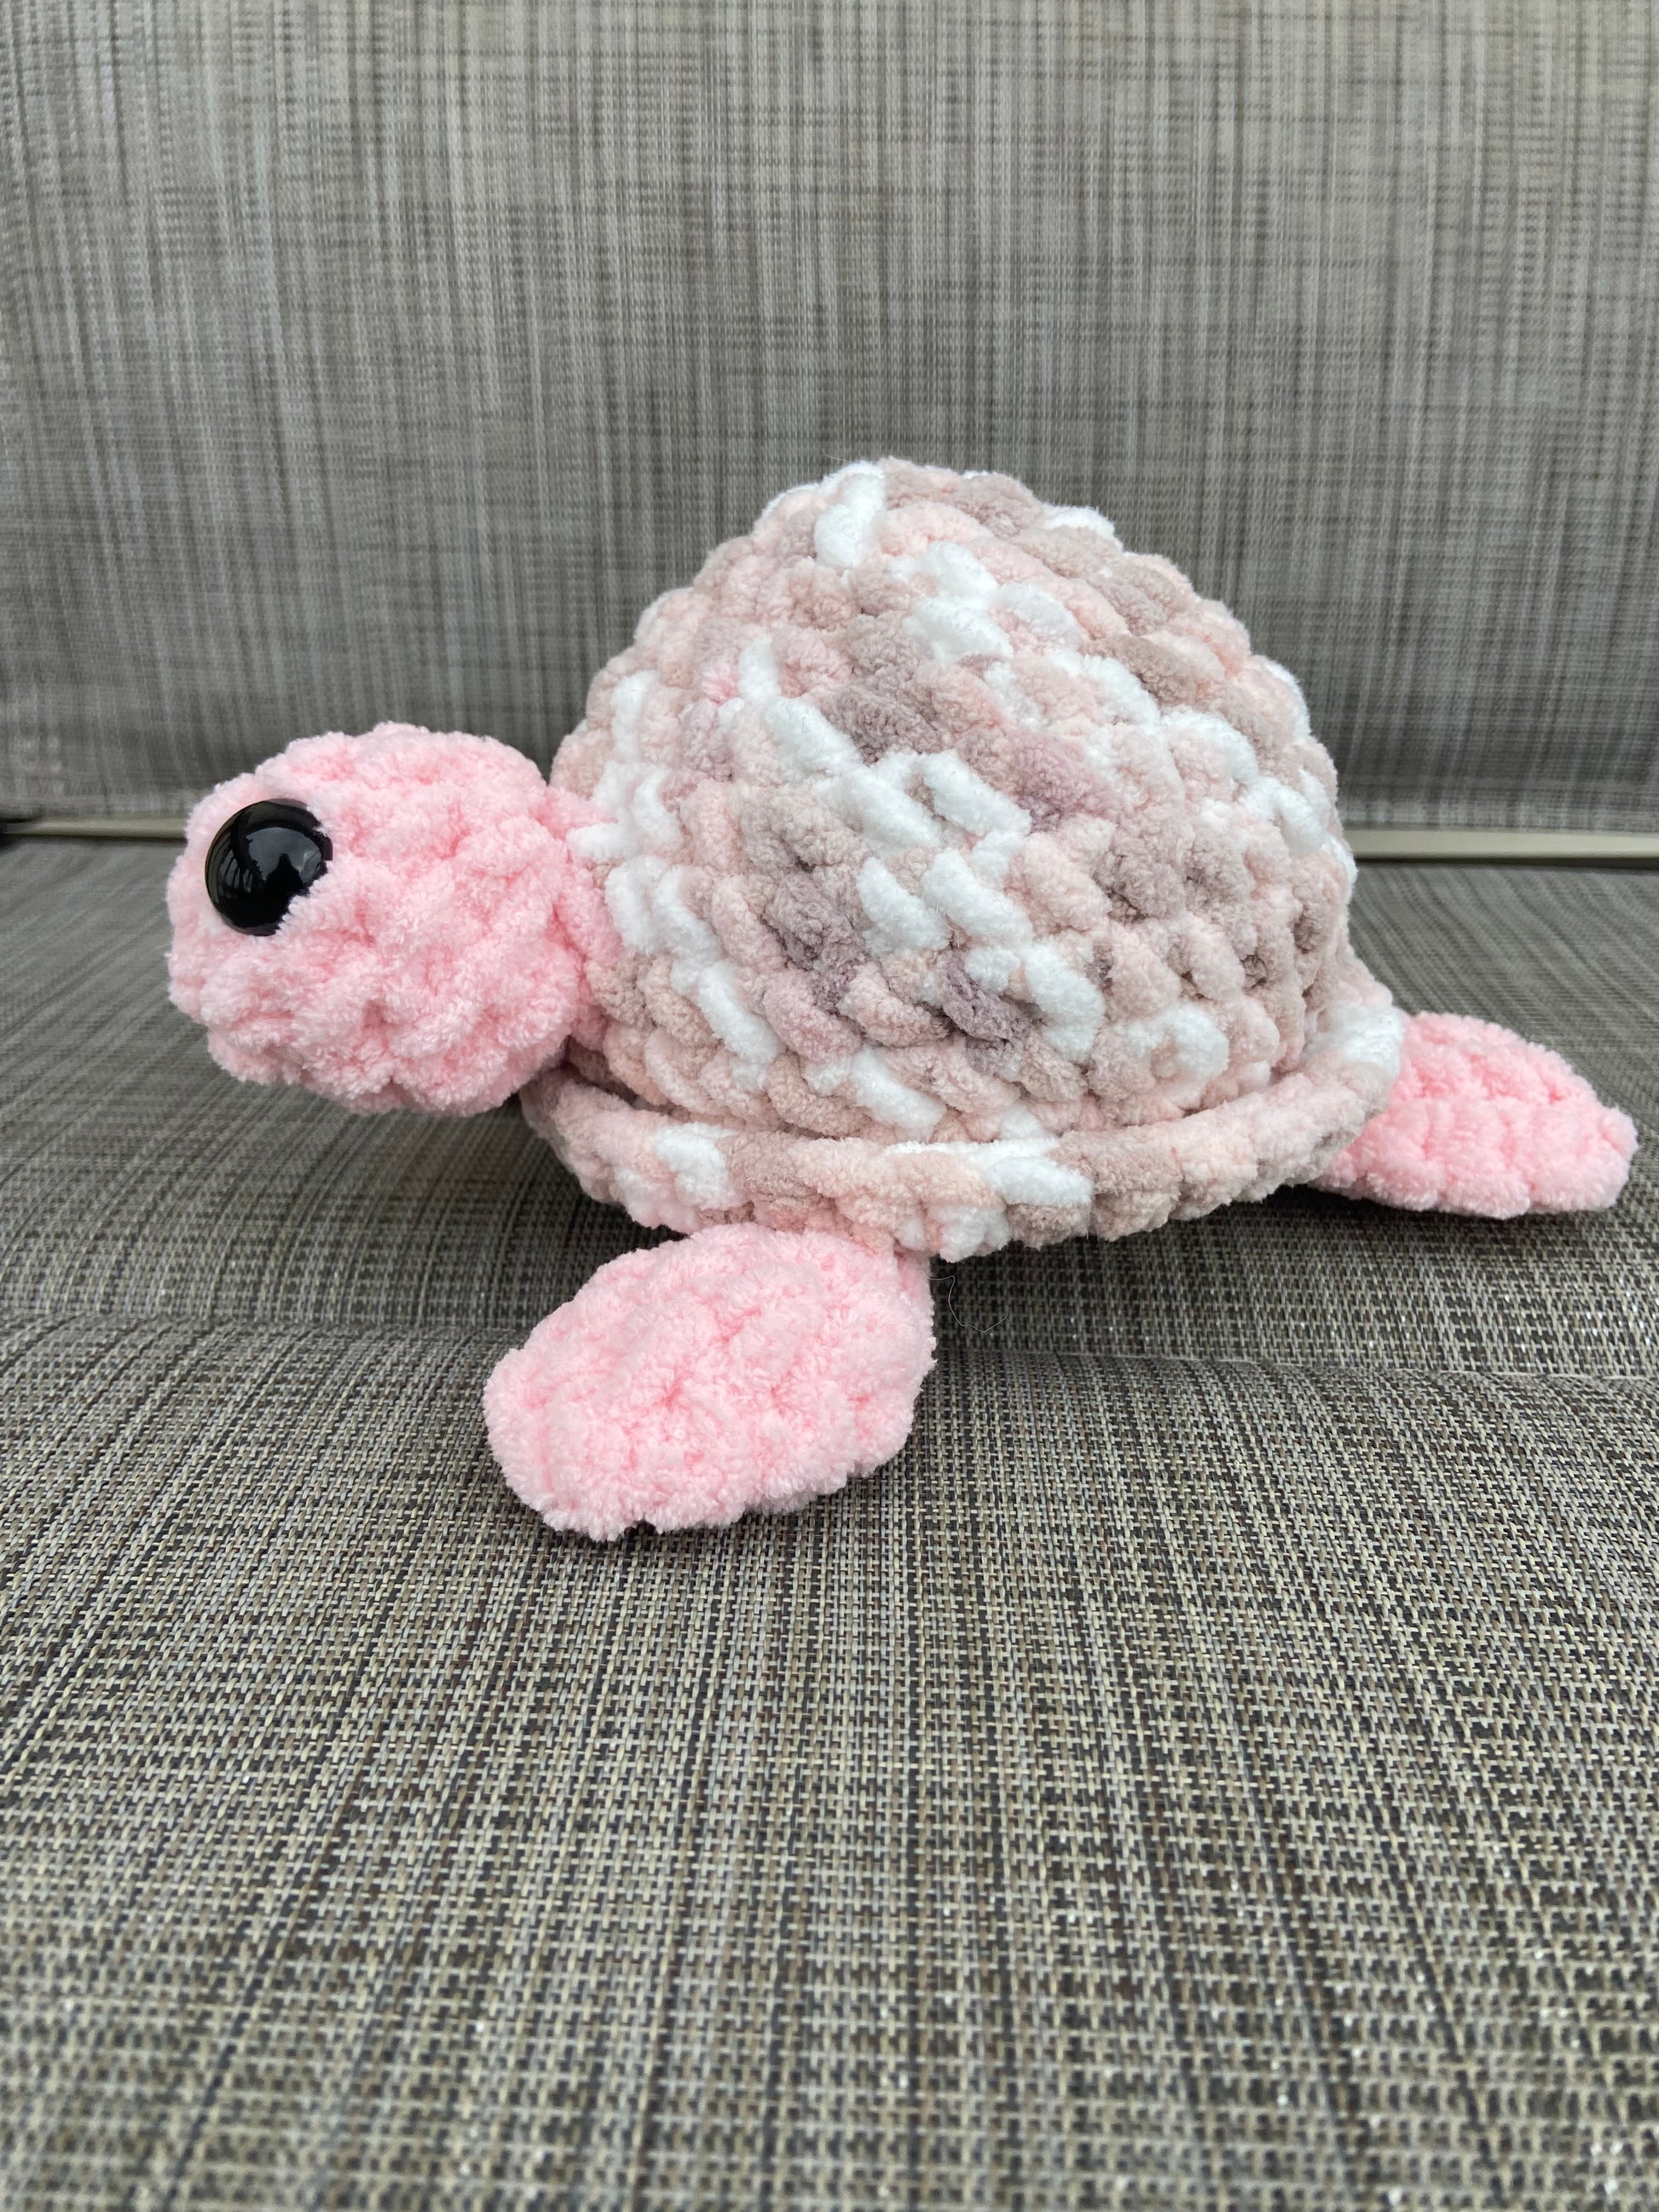 Adorable stuffed crochet turtle in vibrant colors